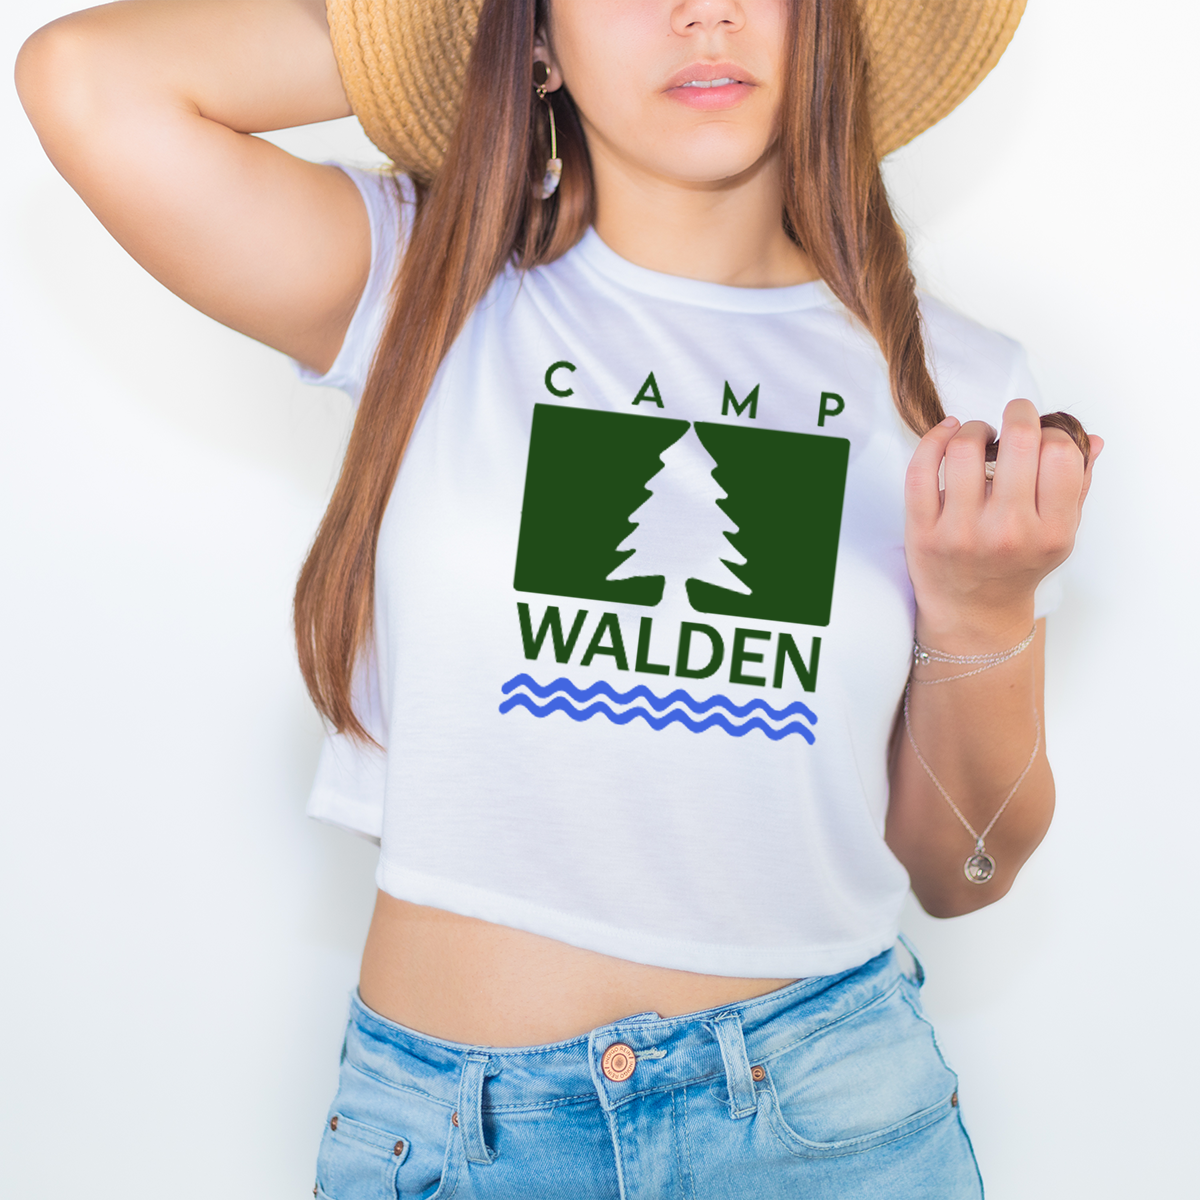 Camp Walden - Royal Tees Designs